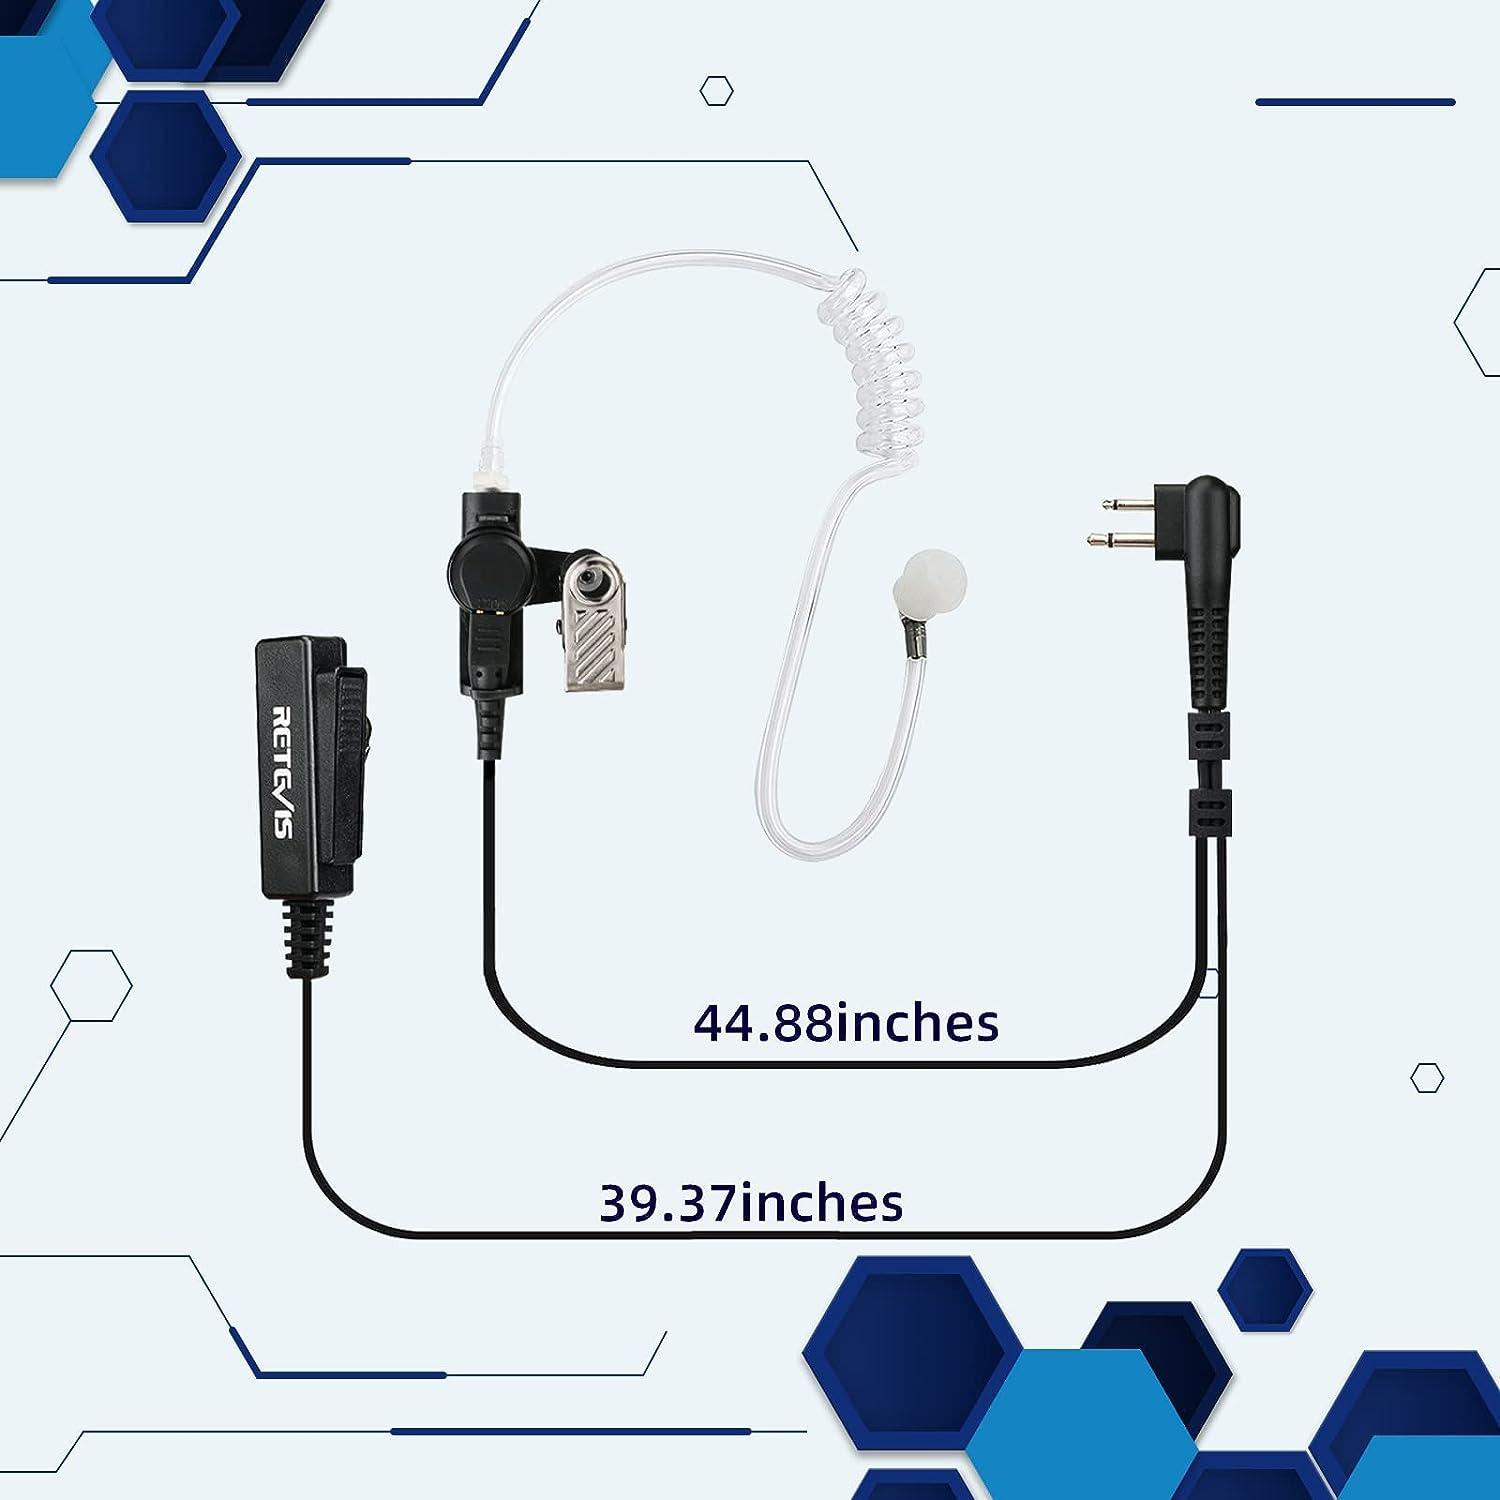 retevis 2 pin acoustic tube headset